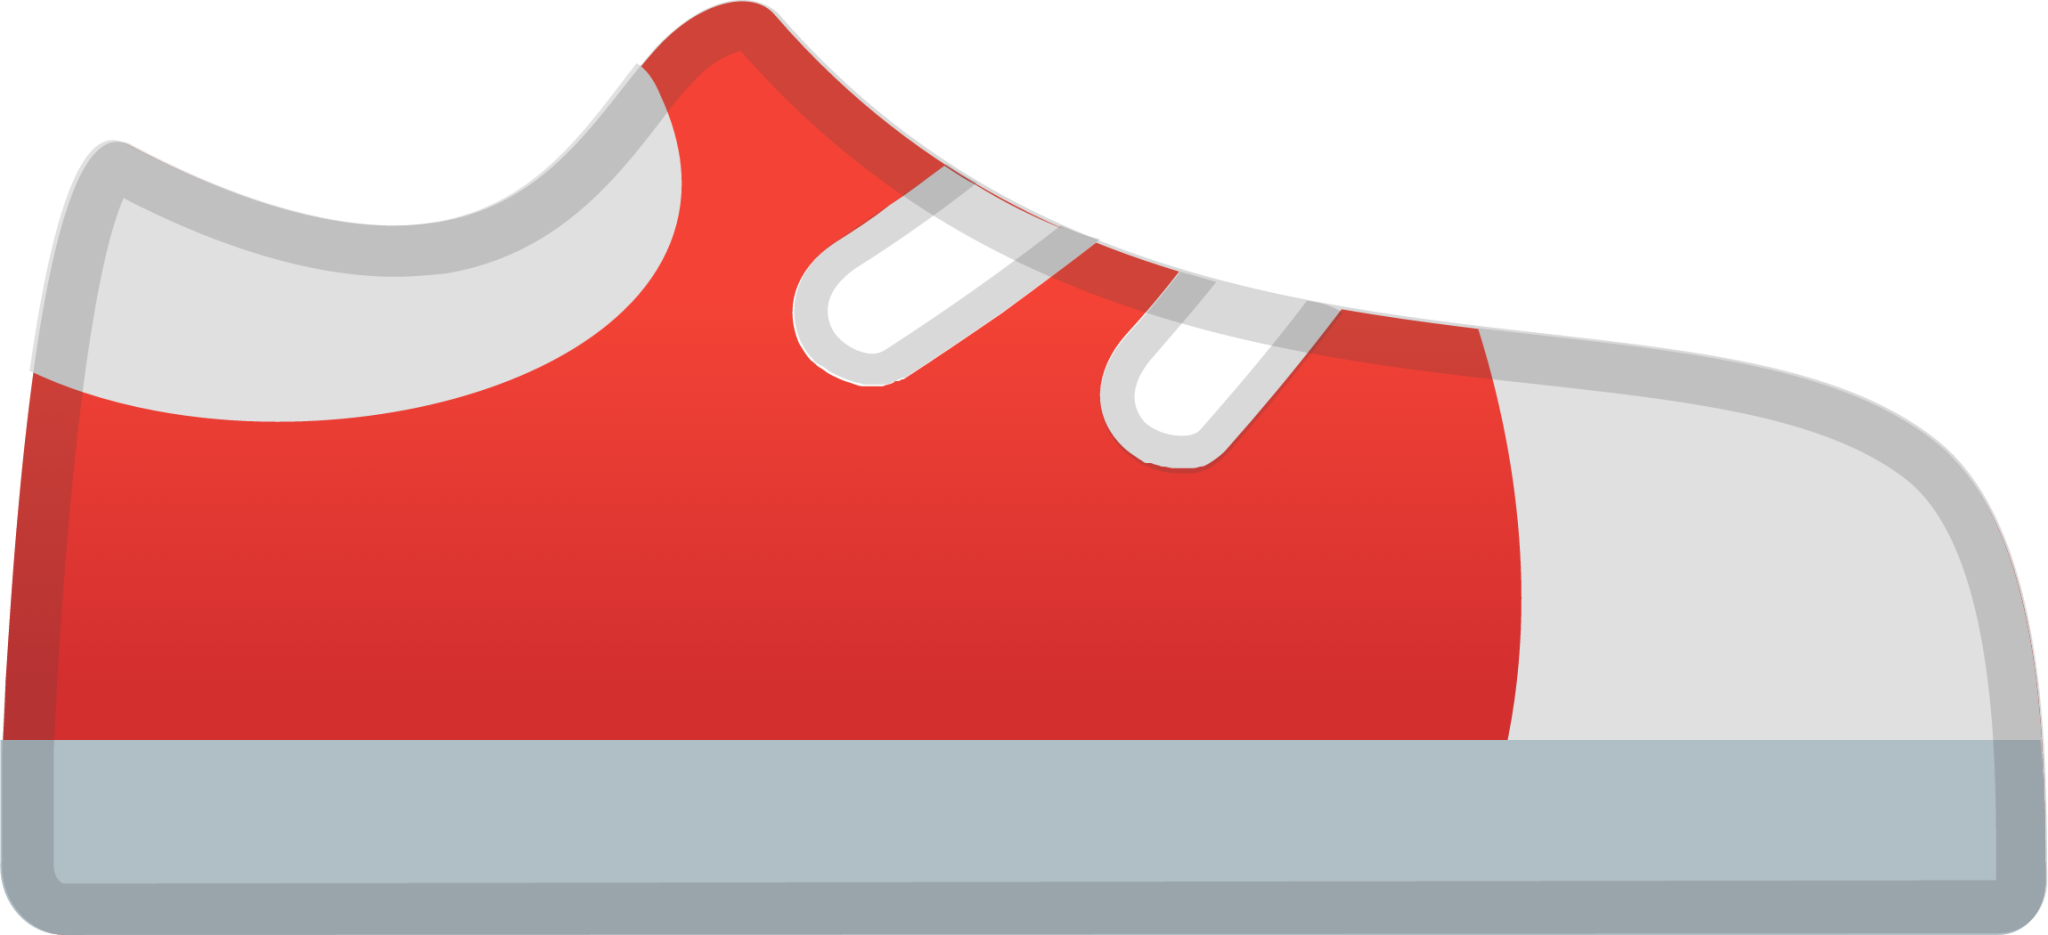 running shoe emoji